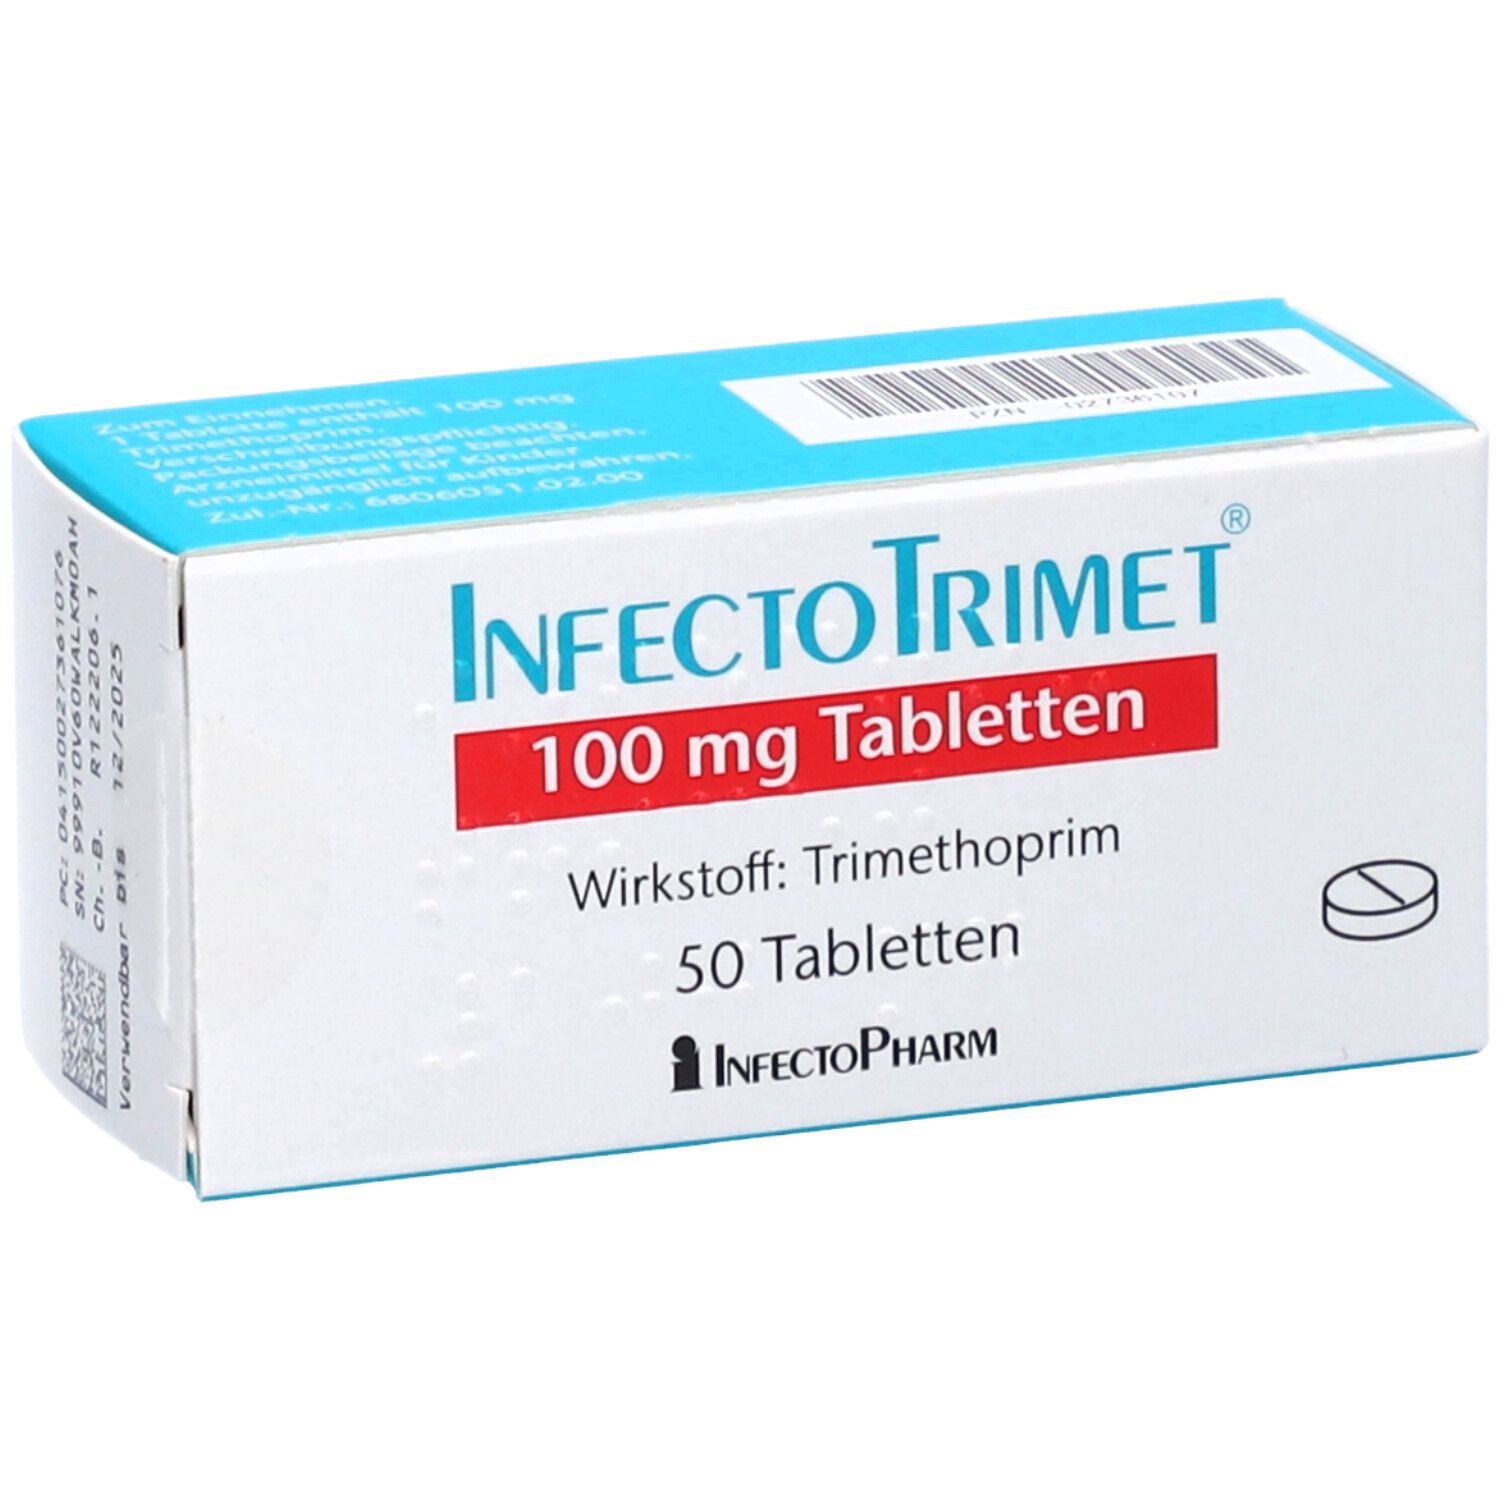 InfectoTrimet® 100 mg